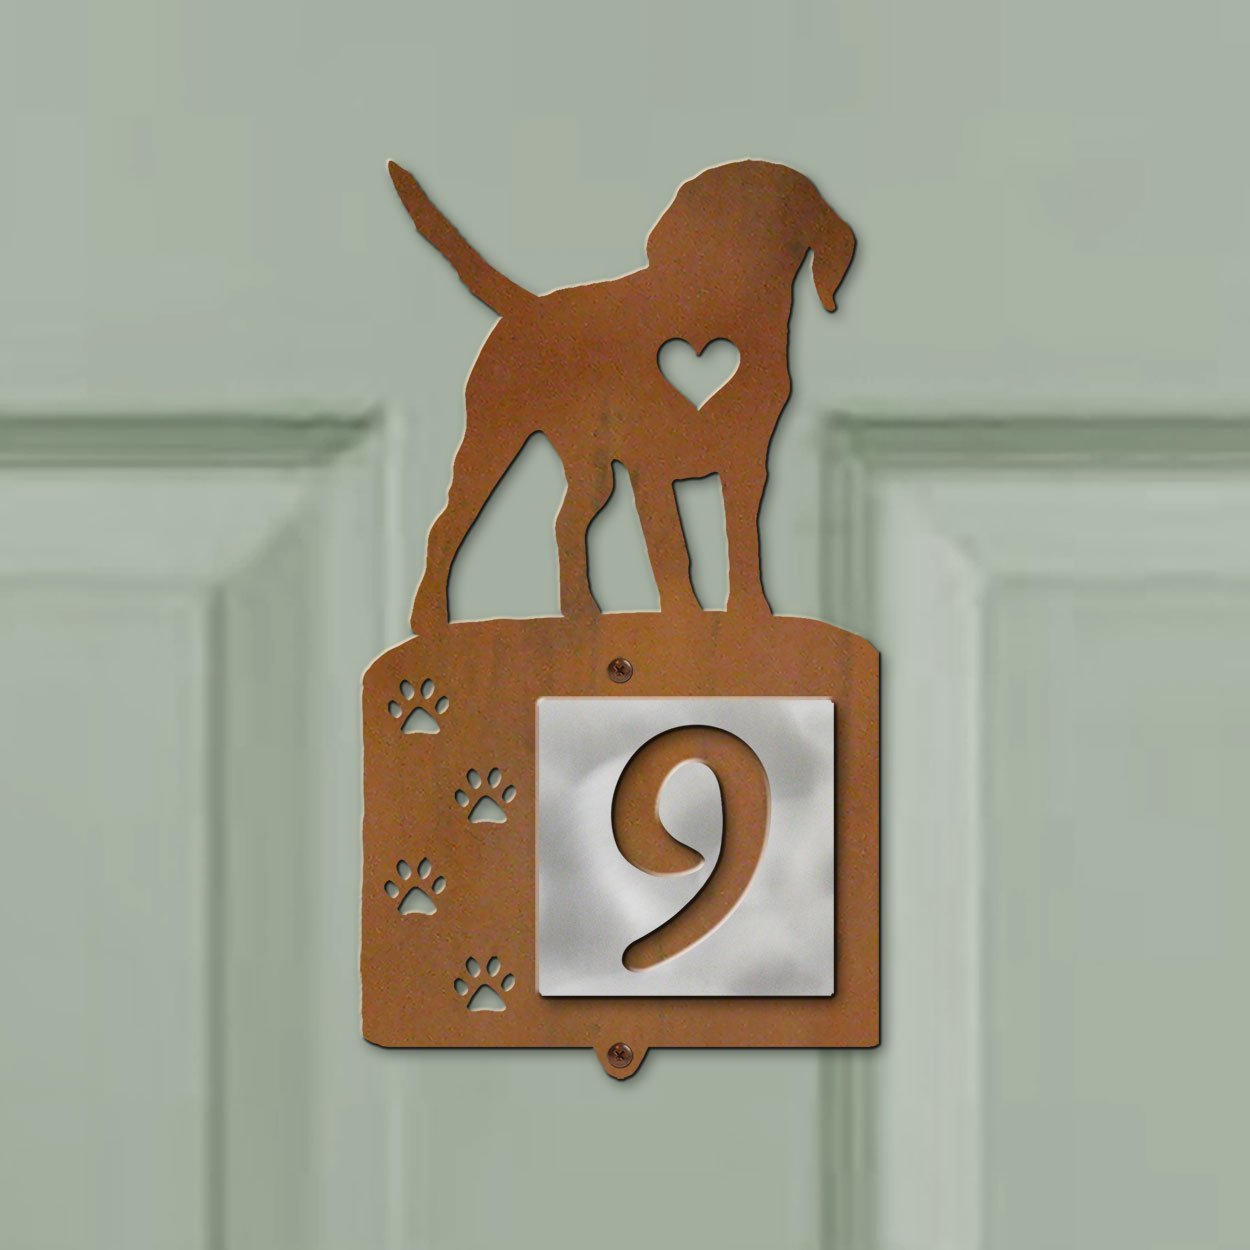 606151 - Beagle Nose Prints One-Digit Rustic Tile Door Number